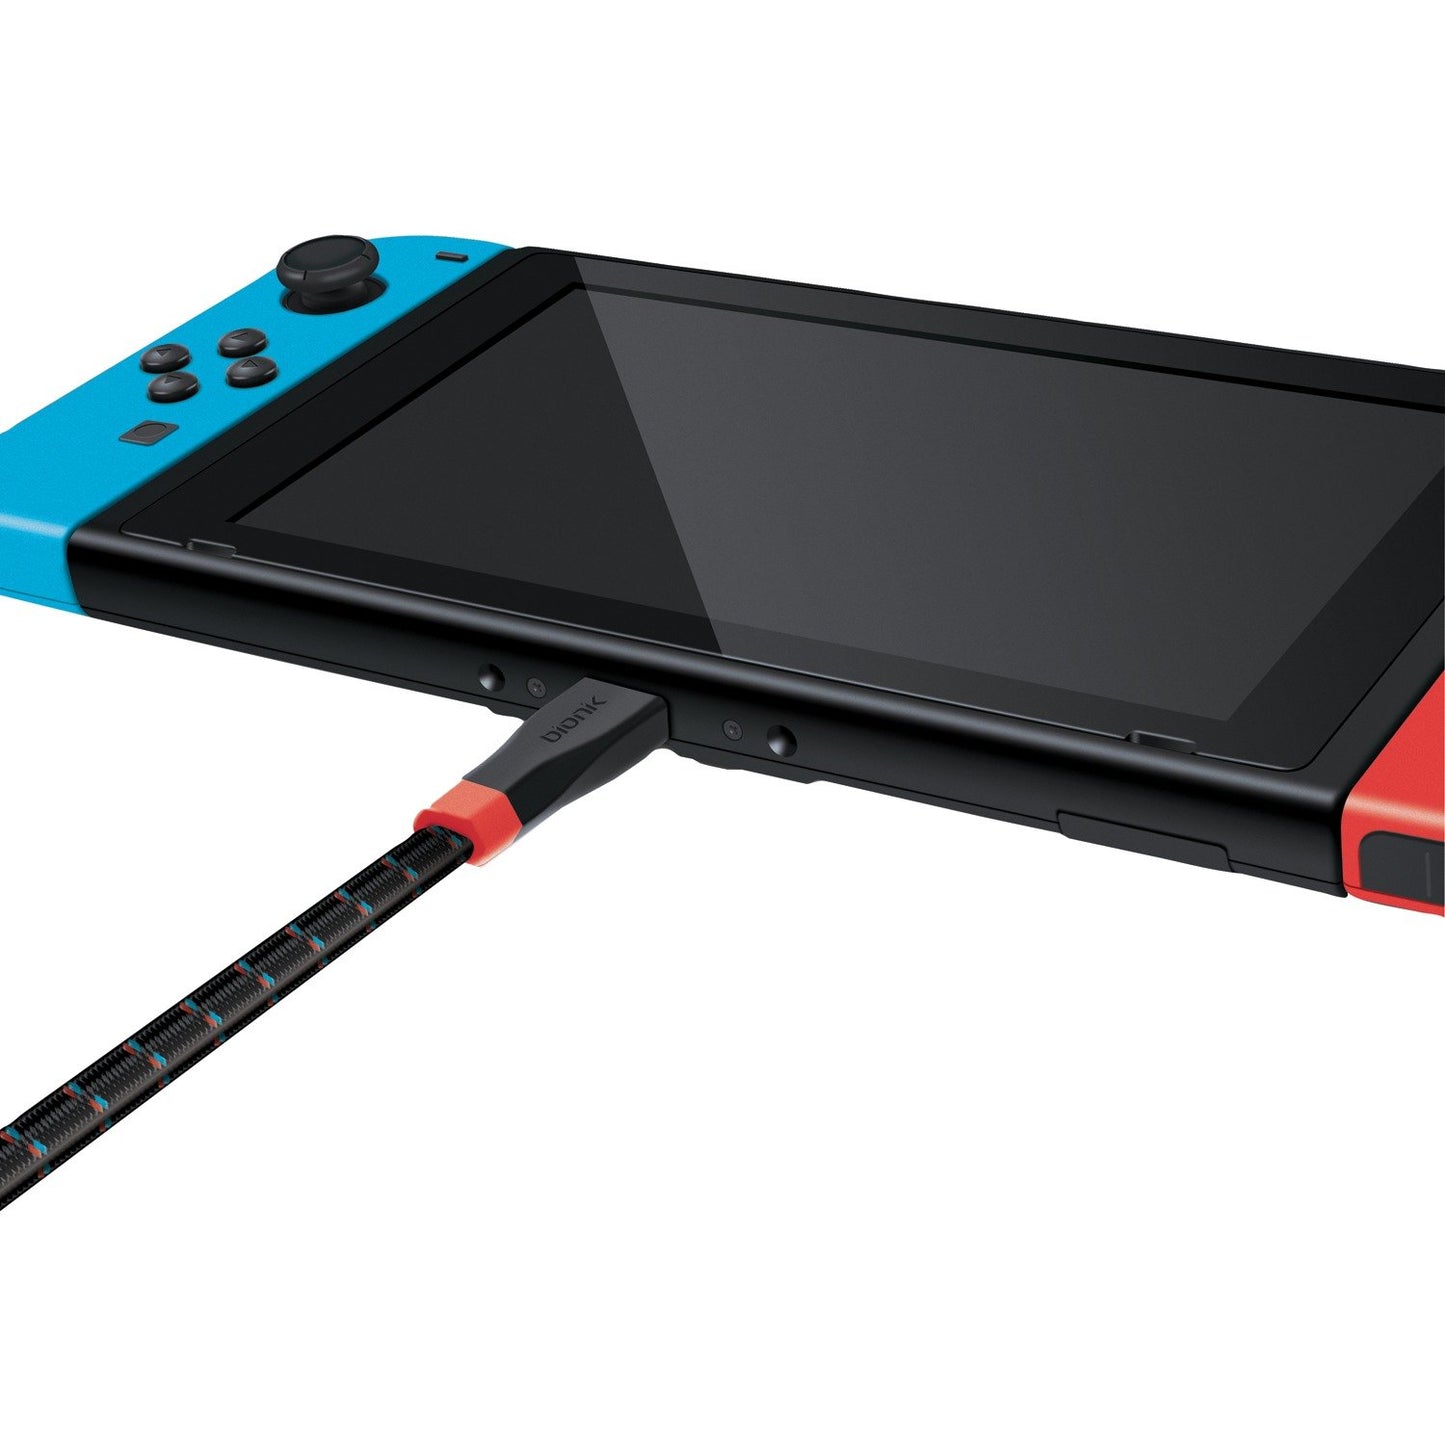 Bionik BNK-9015 Rapid Charge Kit for Nintendo Switch